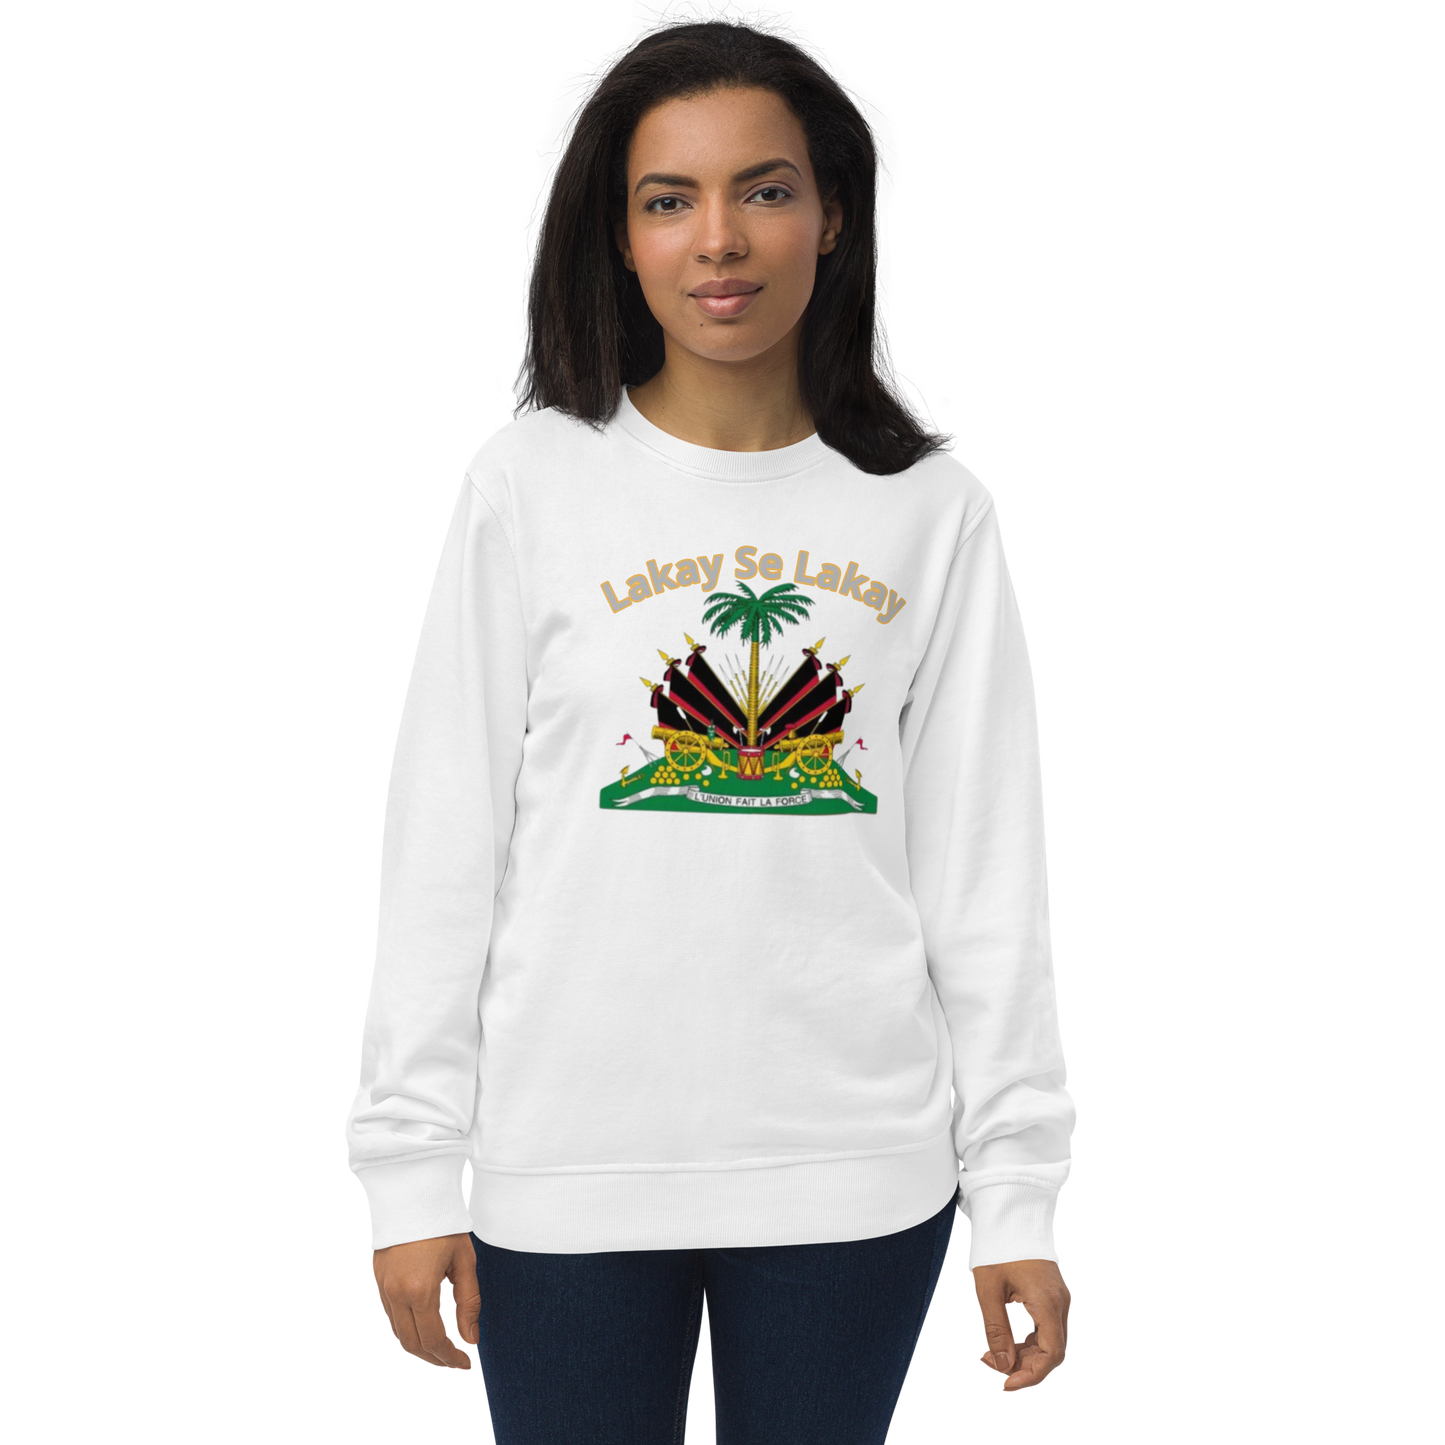 Island rich Unisex organic sweatshirt